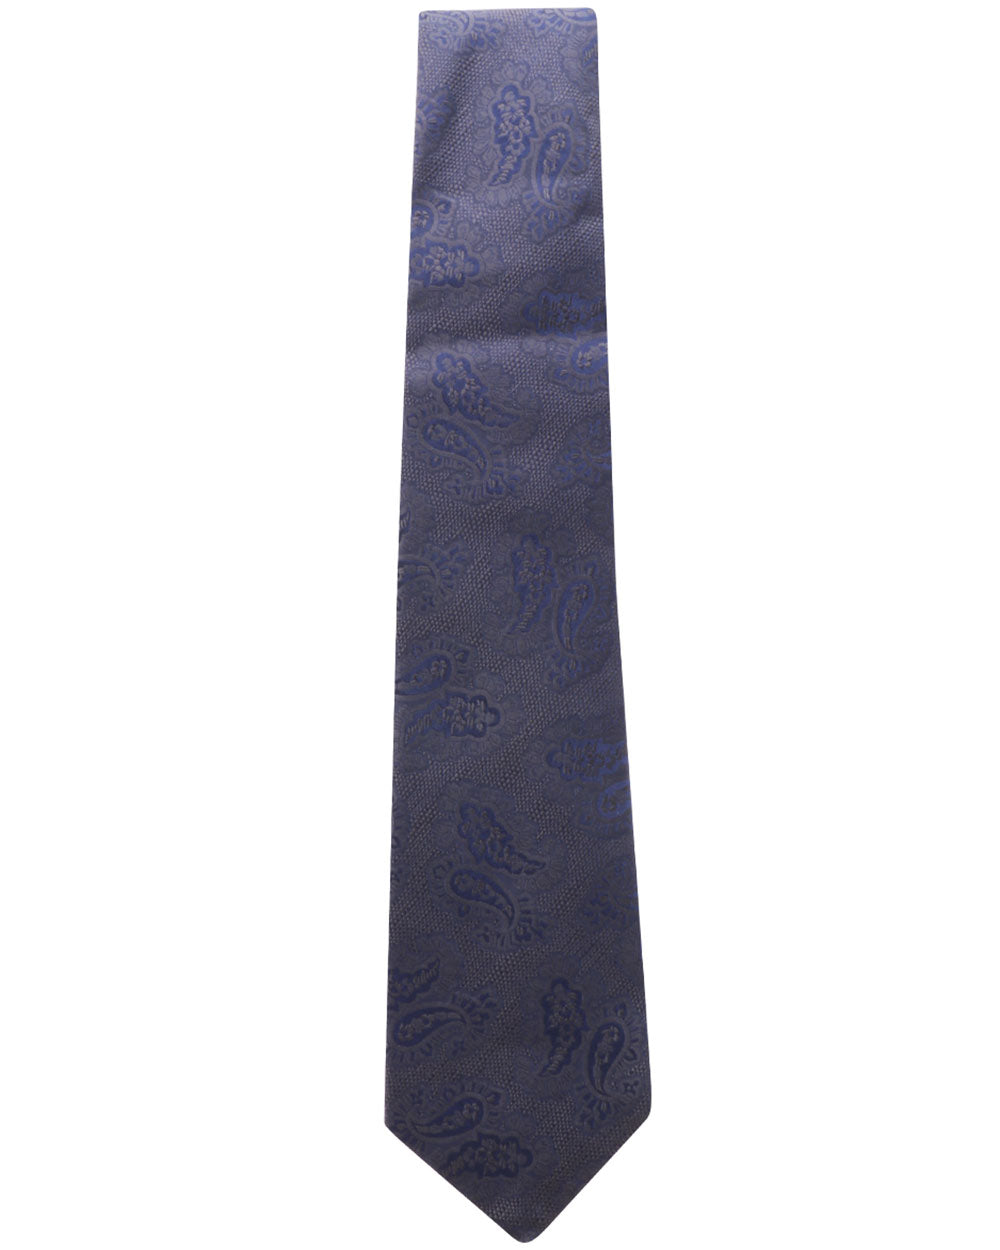 Grey and Navy Tonal Paisley Silk Tie